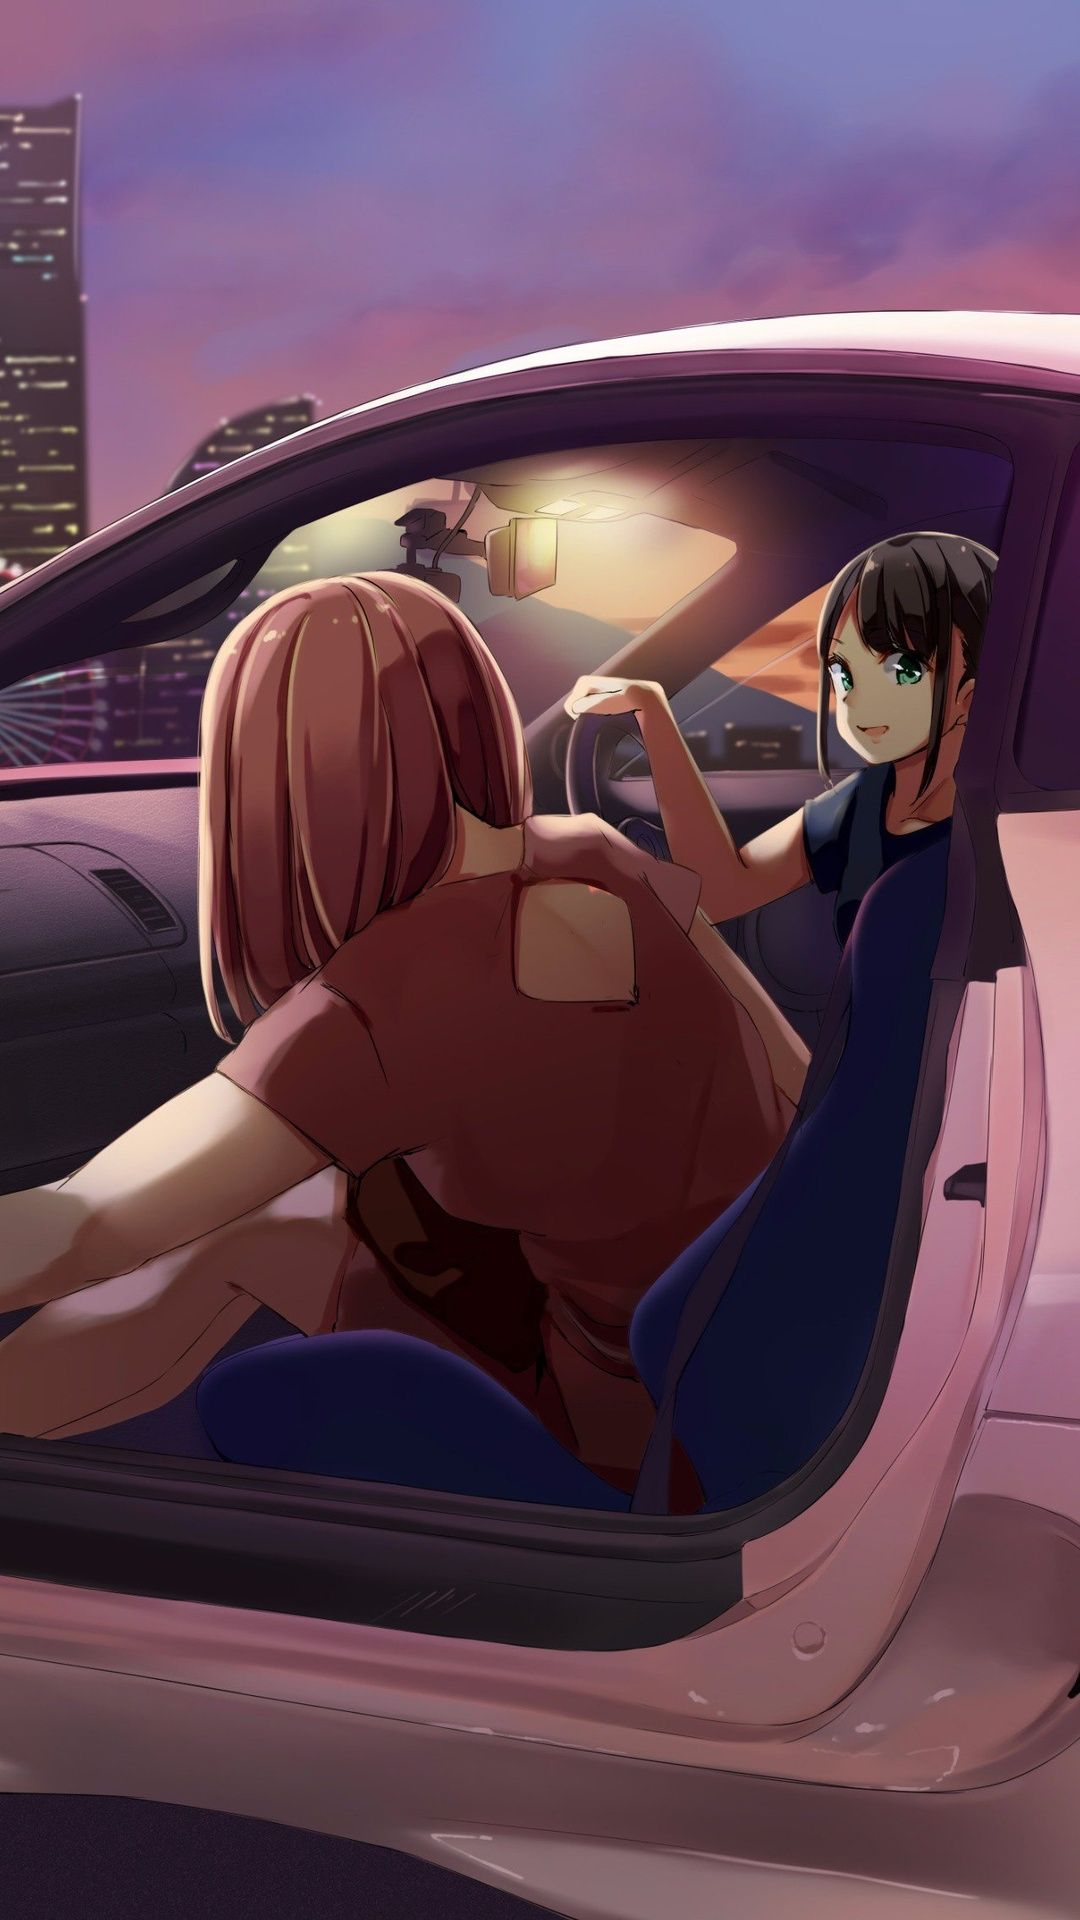 Anime Girls Sitting In Car 4k iPhone 6s, 6 Plus, Pixel